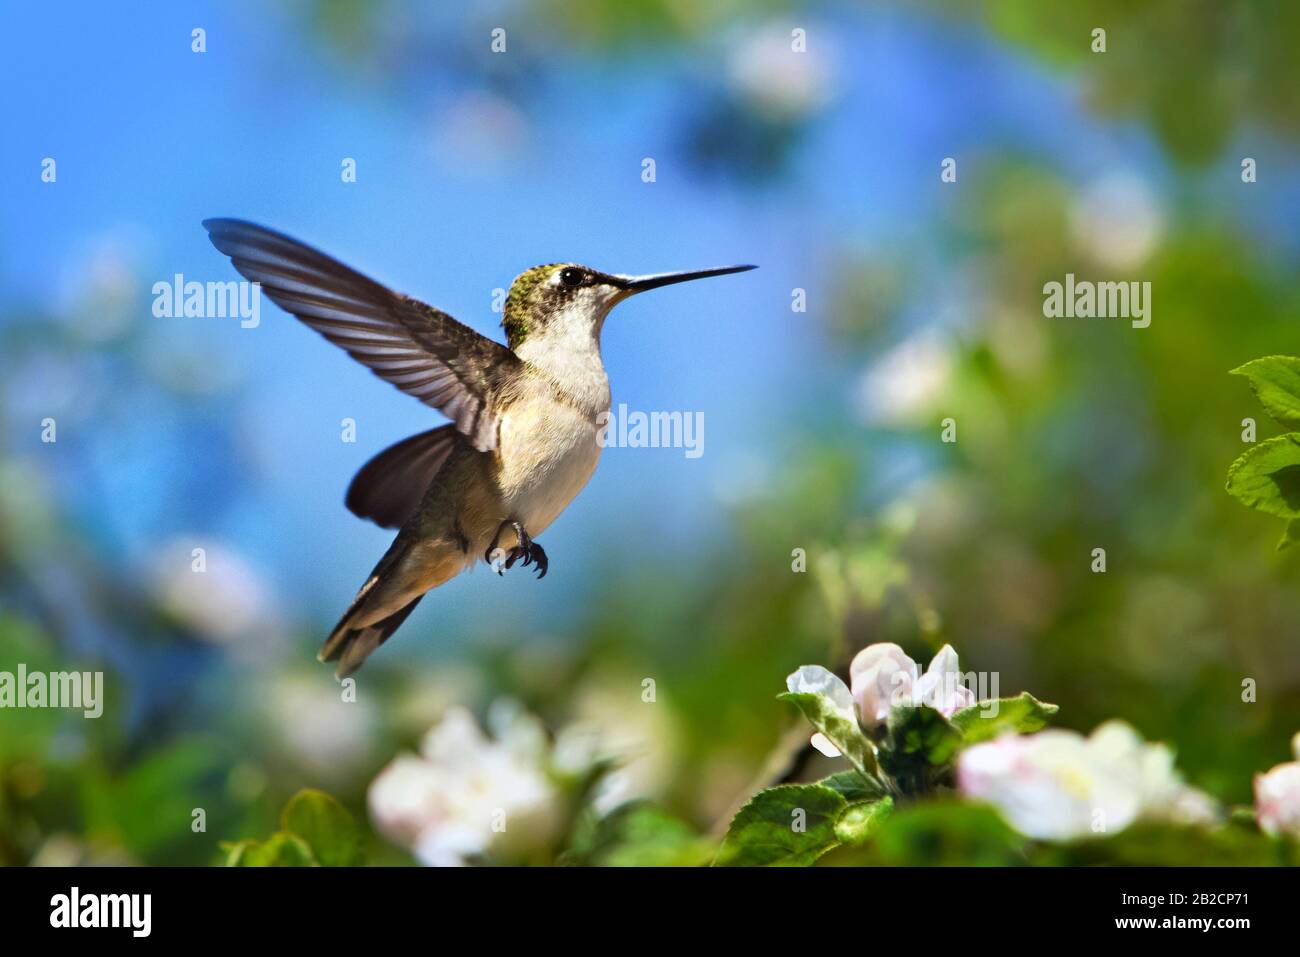 Hummingbird In Flight With Spring Flowers Stock Photo